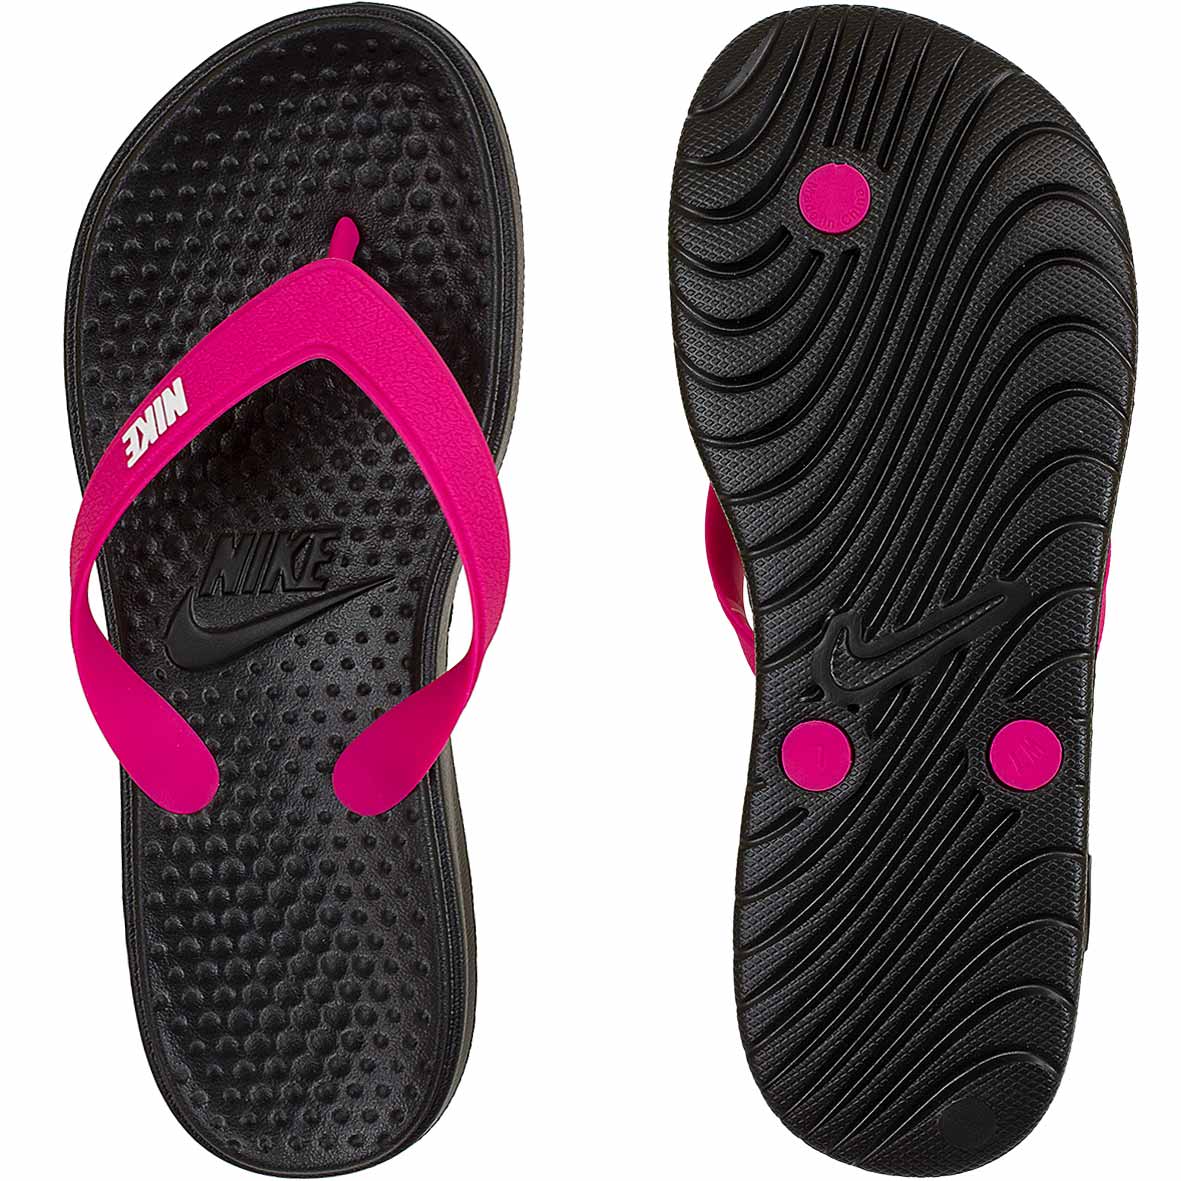 ☆ Nike Damen Flip-Flops Solay Thong schwarz/pink - hier bestellen!